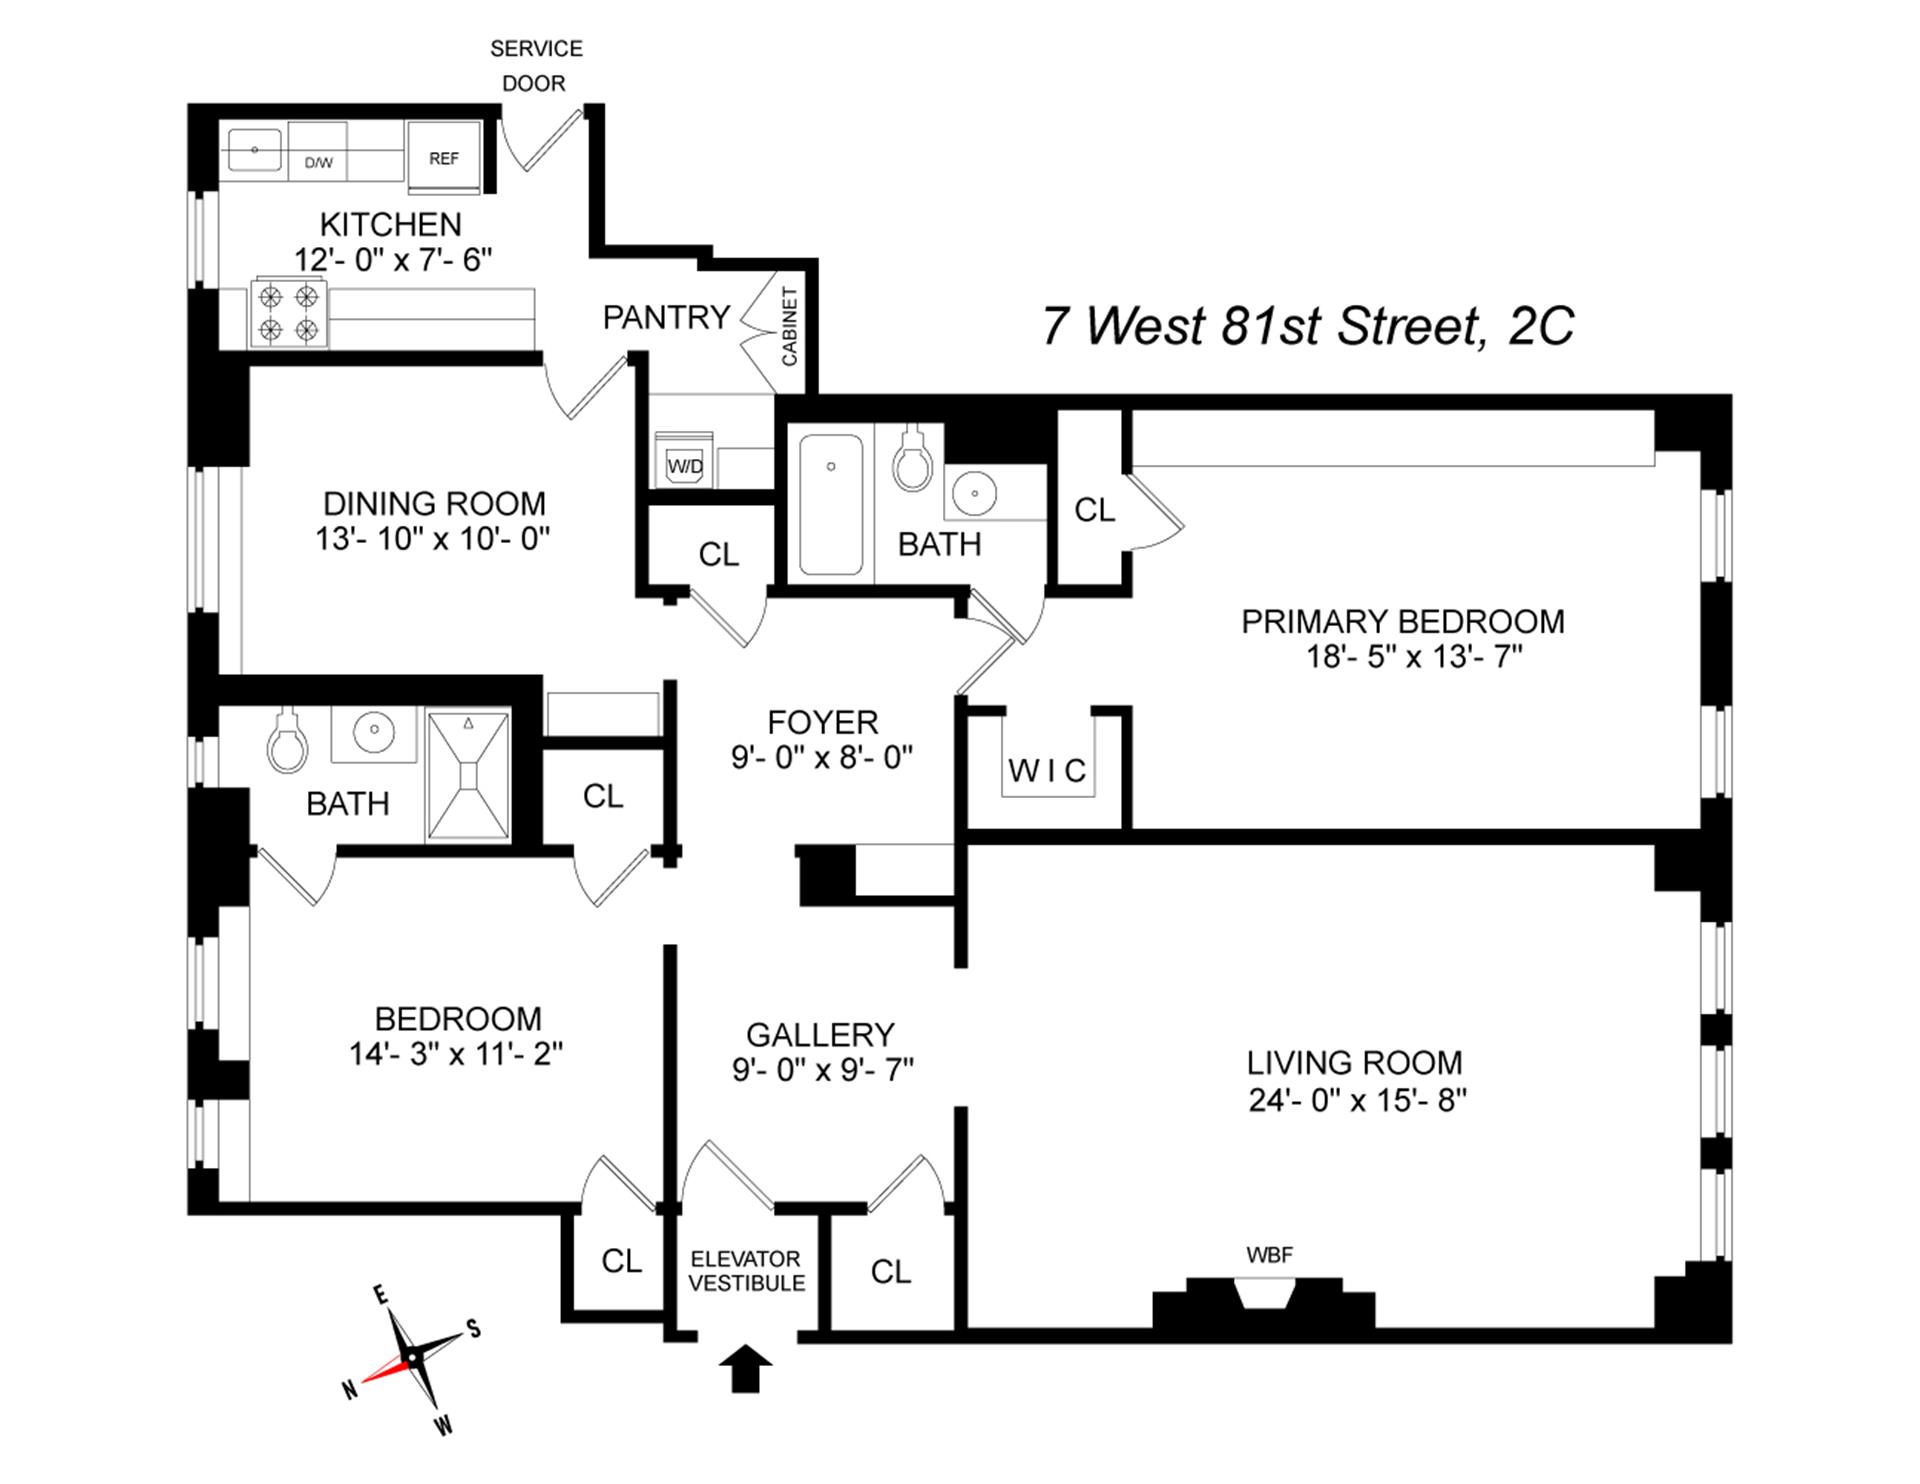 Floorplan for 7 West 81st Street, 2C